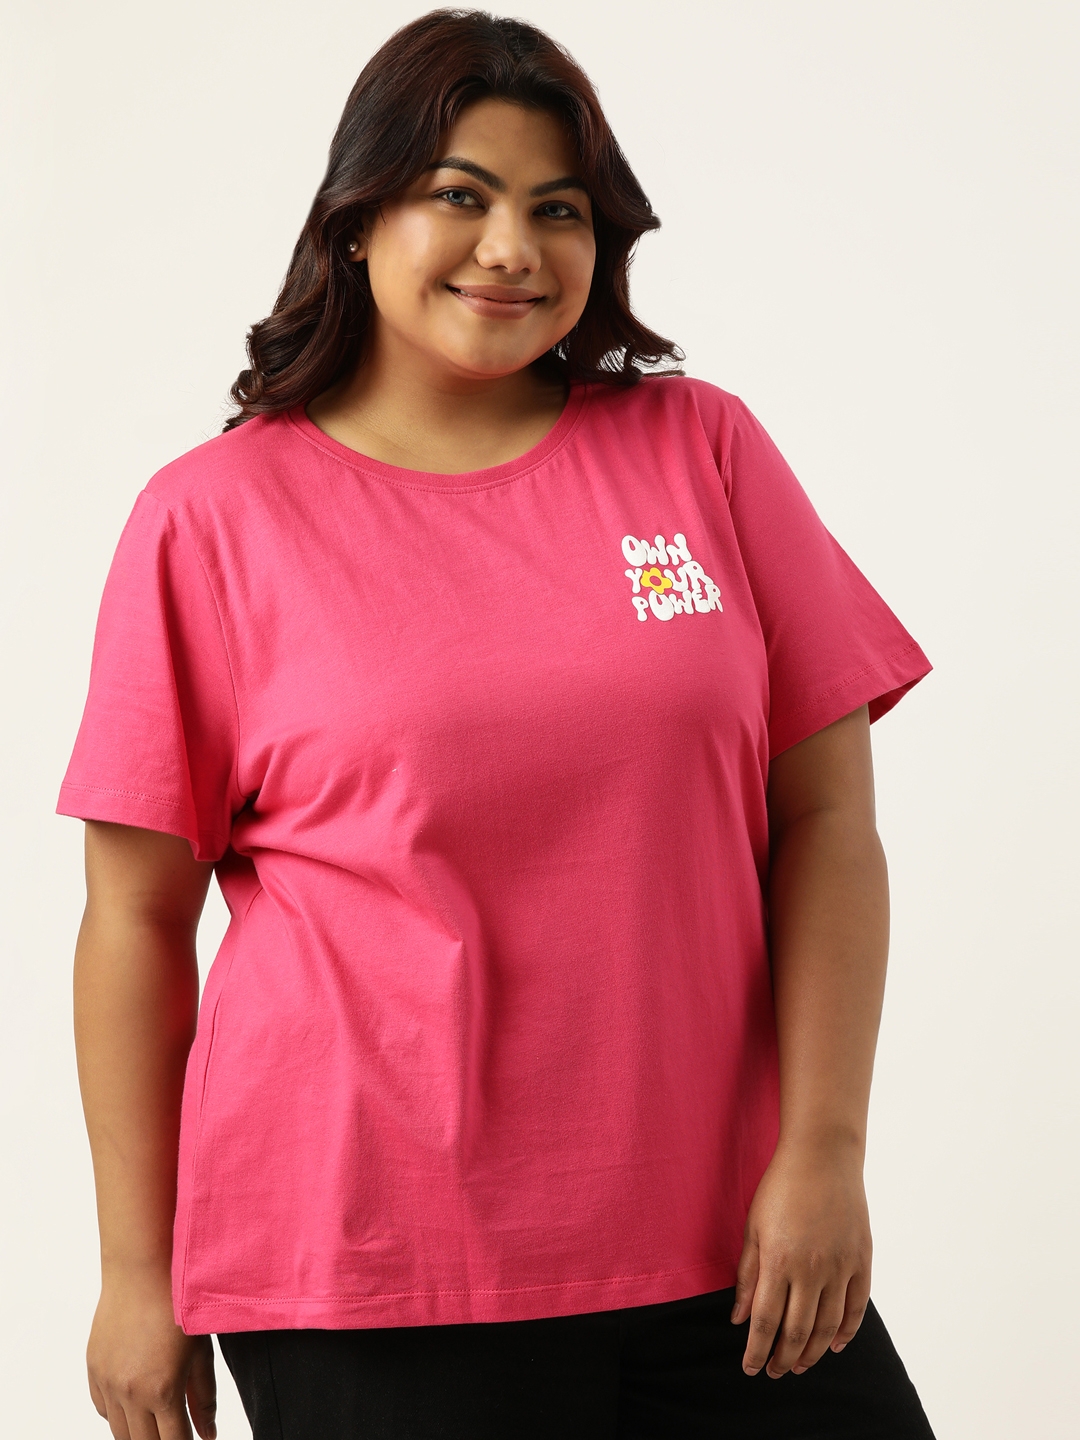 Plus Size Fuchsia Graphic Printed Round Neck Bio Wash tshirt For women